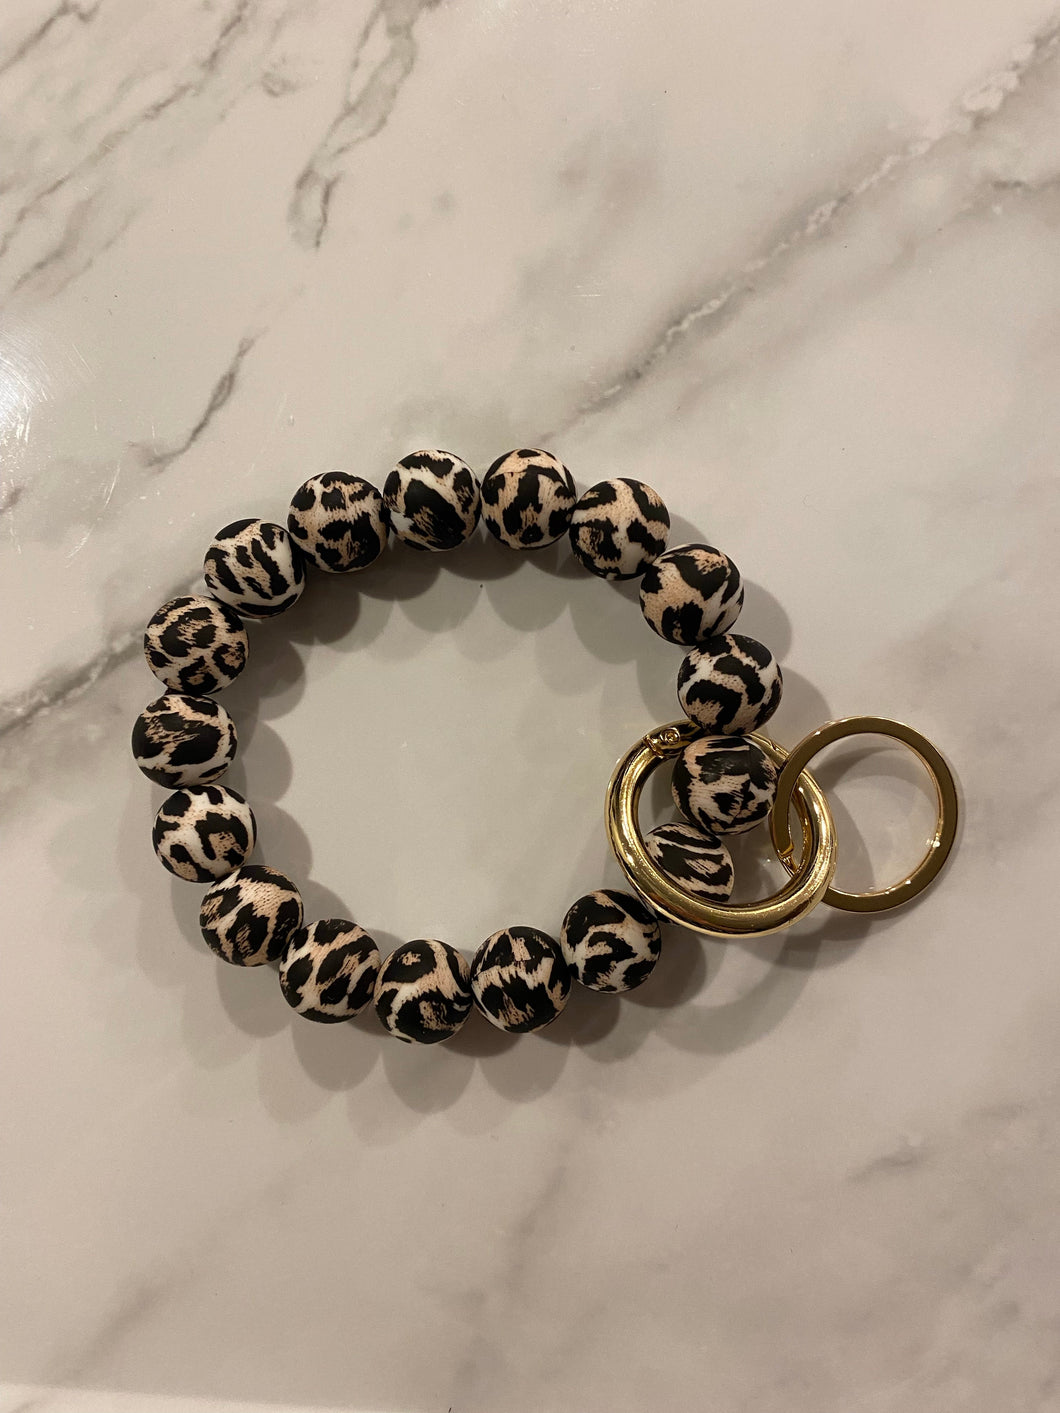 Leopard key ring bangle silicone/wood beads - C&C Boutique